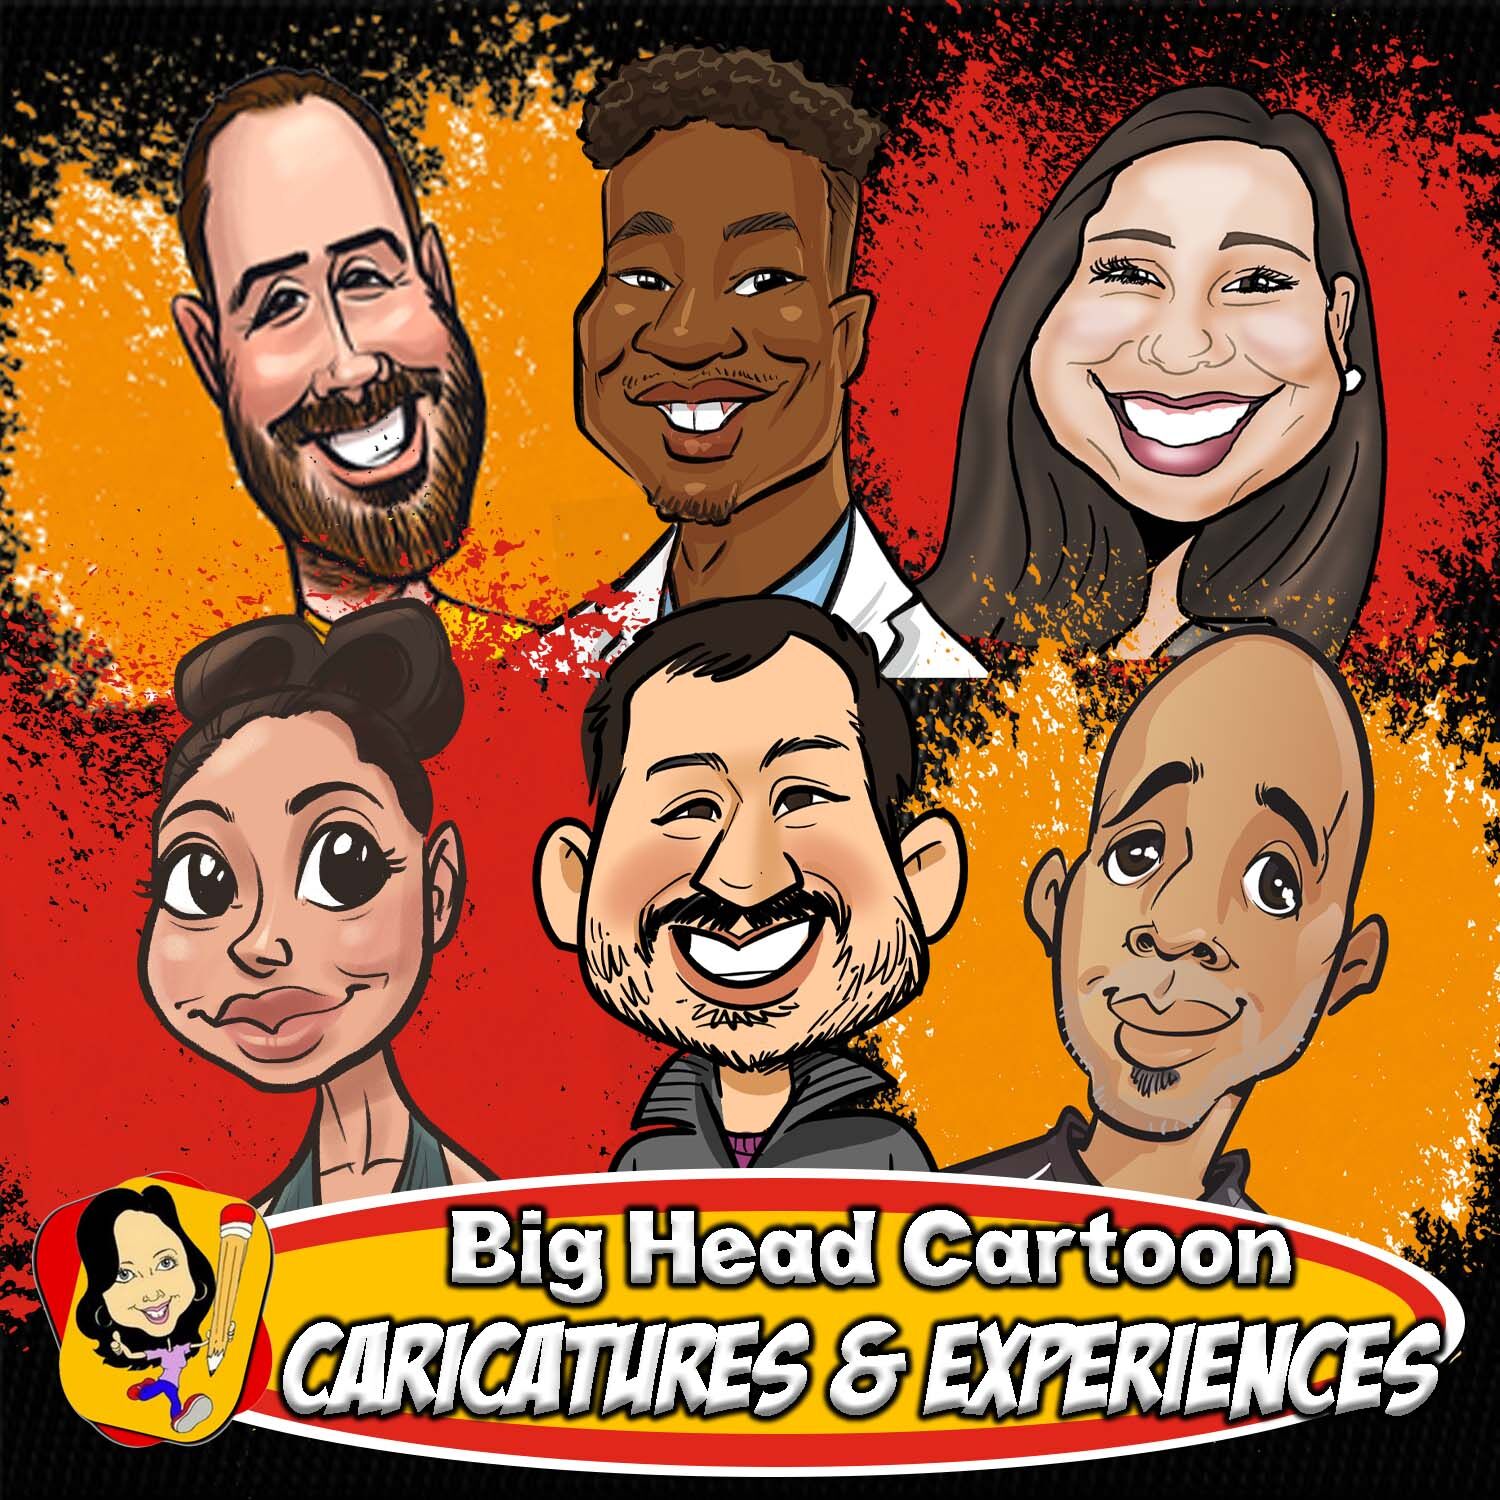 Big Head Cartoon Caricature Art & Entertainment - Caricaturist Nashville,  TN - The Bash